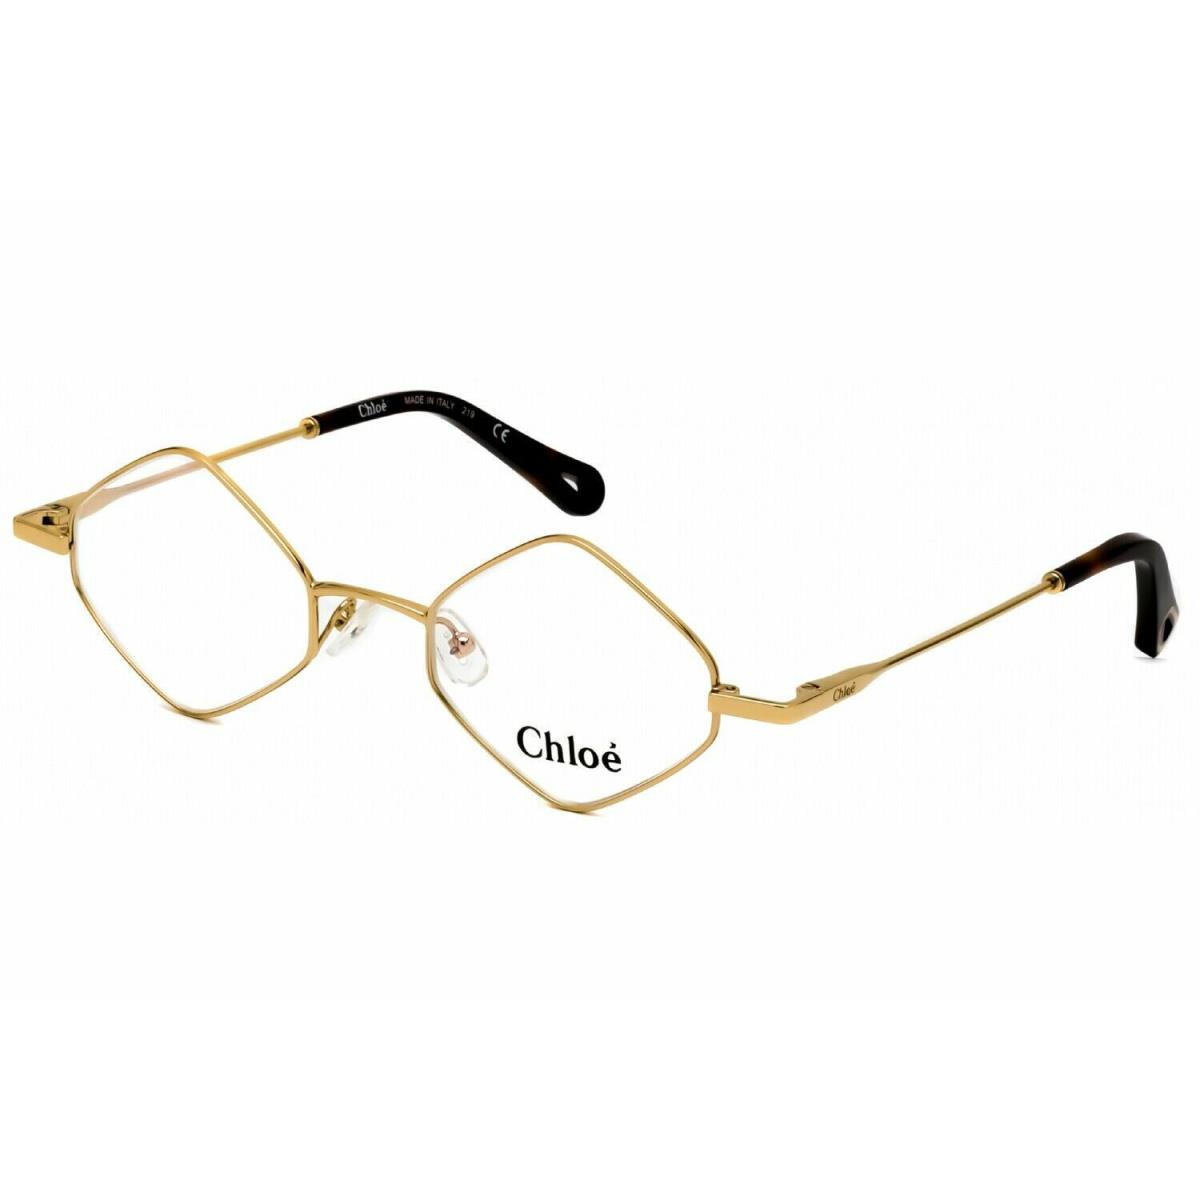 Chloé Chloe Unisex CE2158-717 Yellow Gold Eyeglasses / Optical -46mm